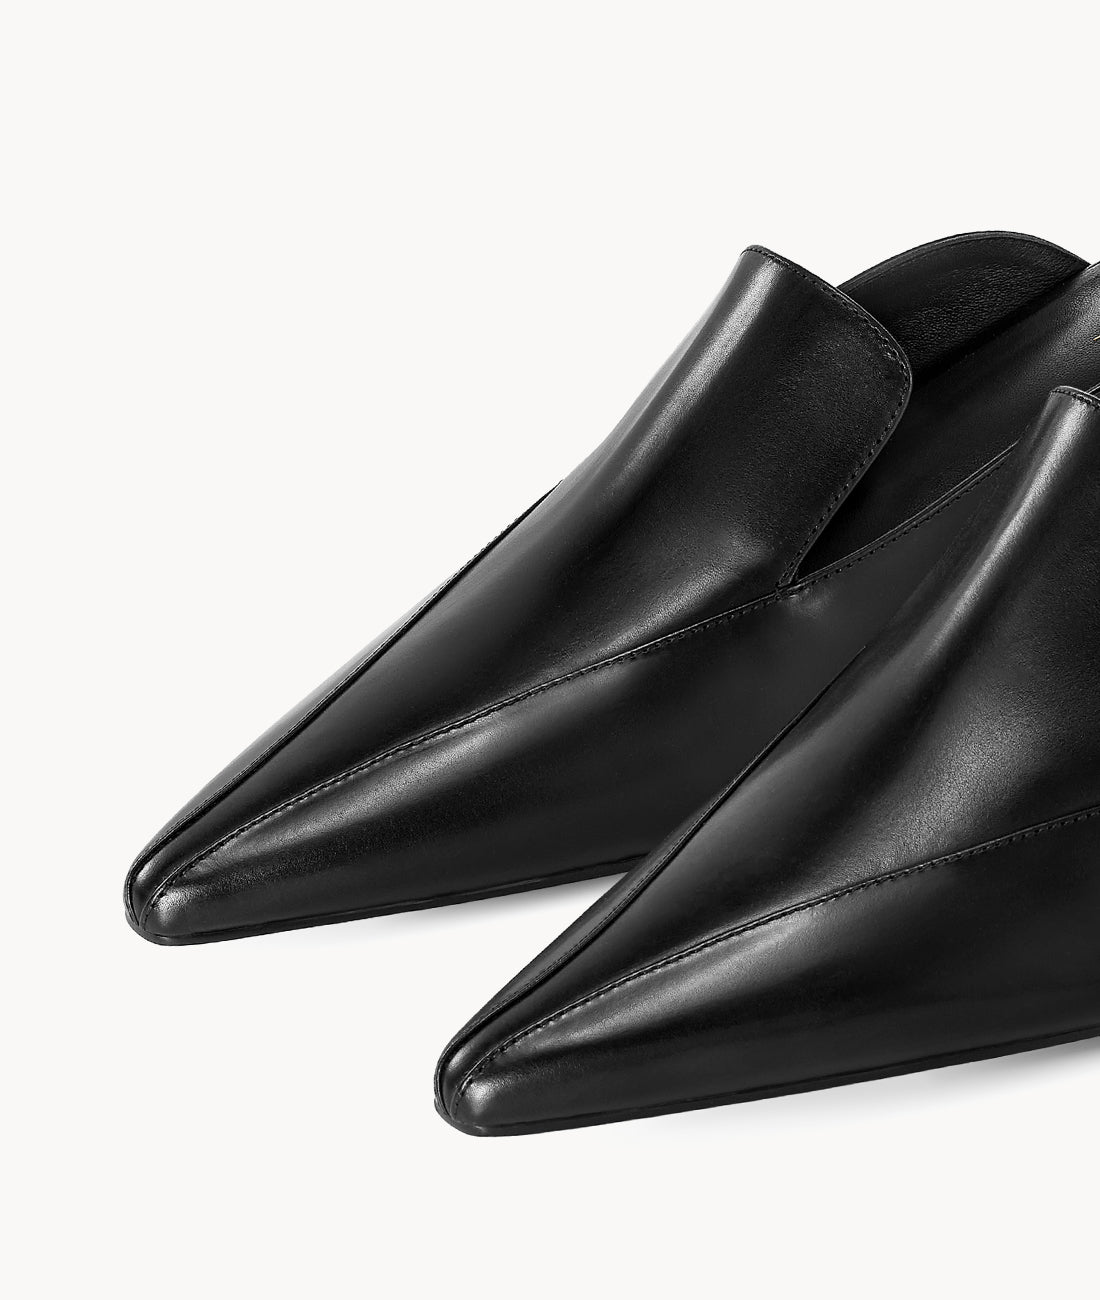 7or9 Black Label Series  High-end Comfortable Black Calfskin  Leather Heels for Women 35 mm/1.38" Kitten Heels - New Moon 4.0